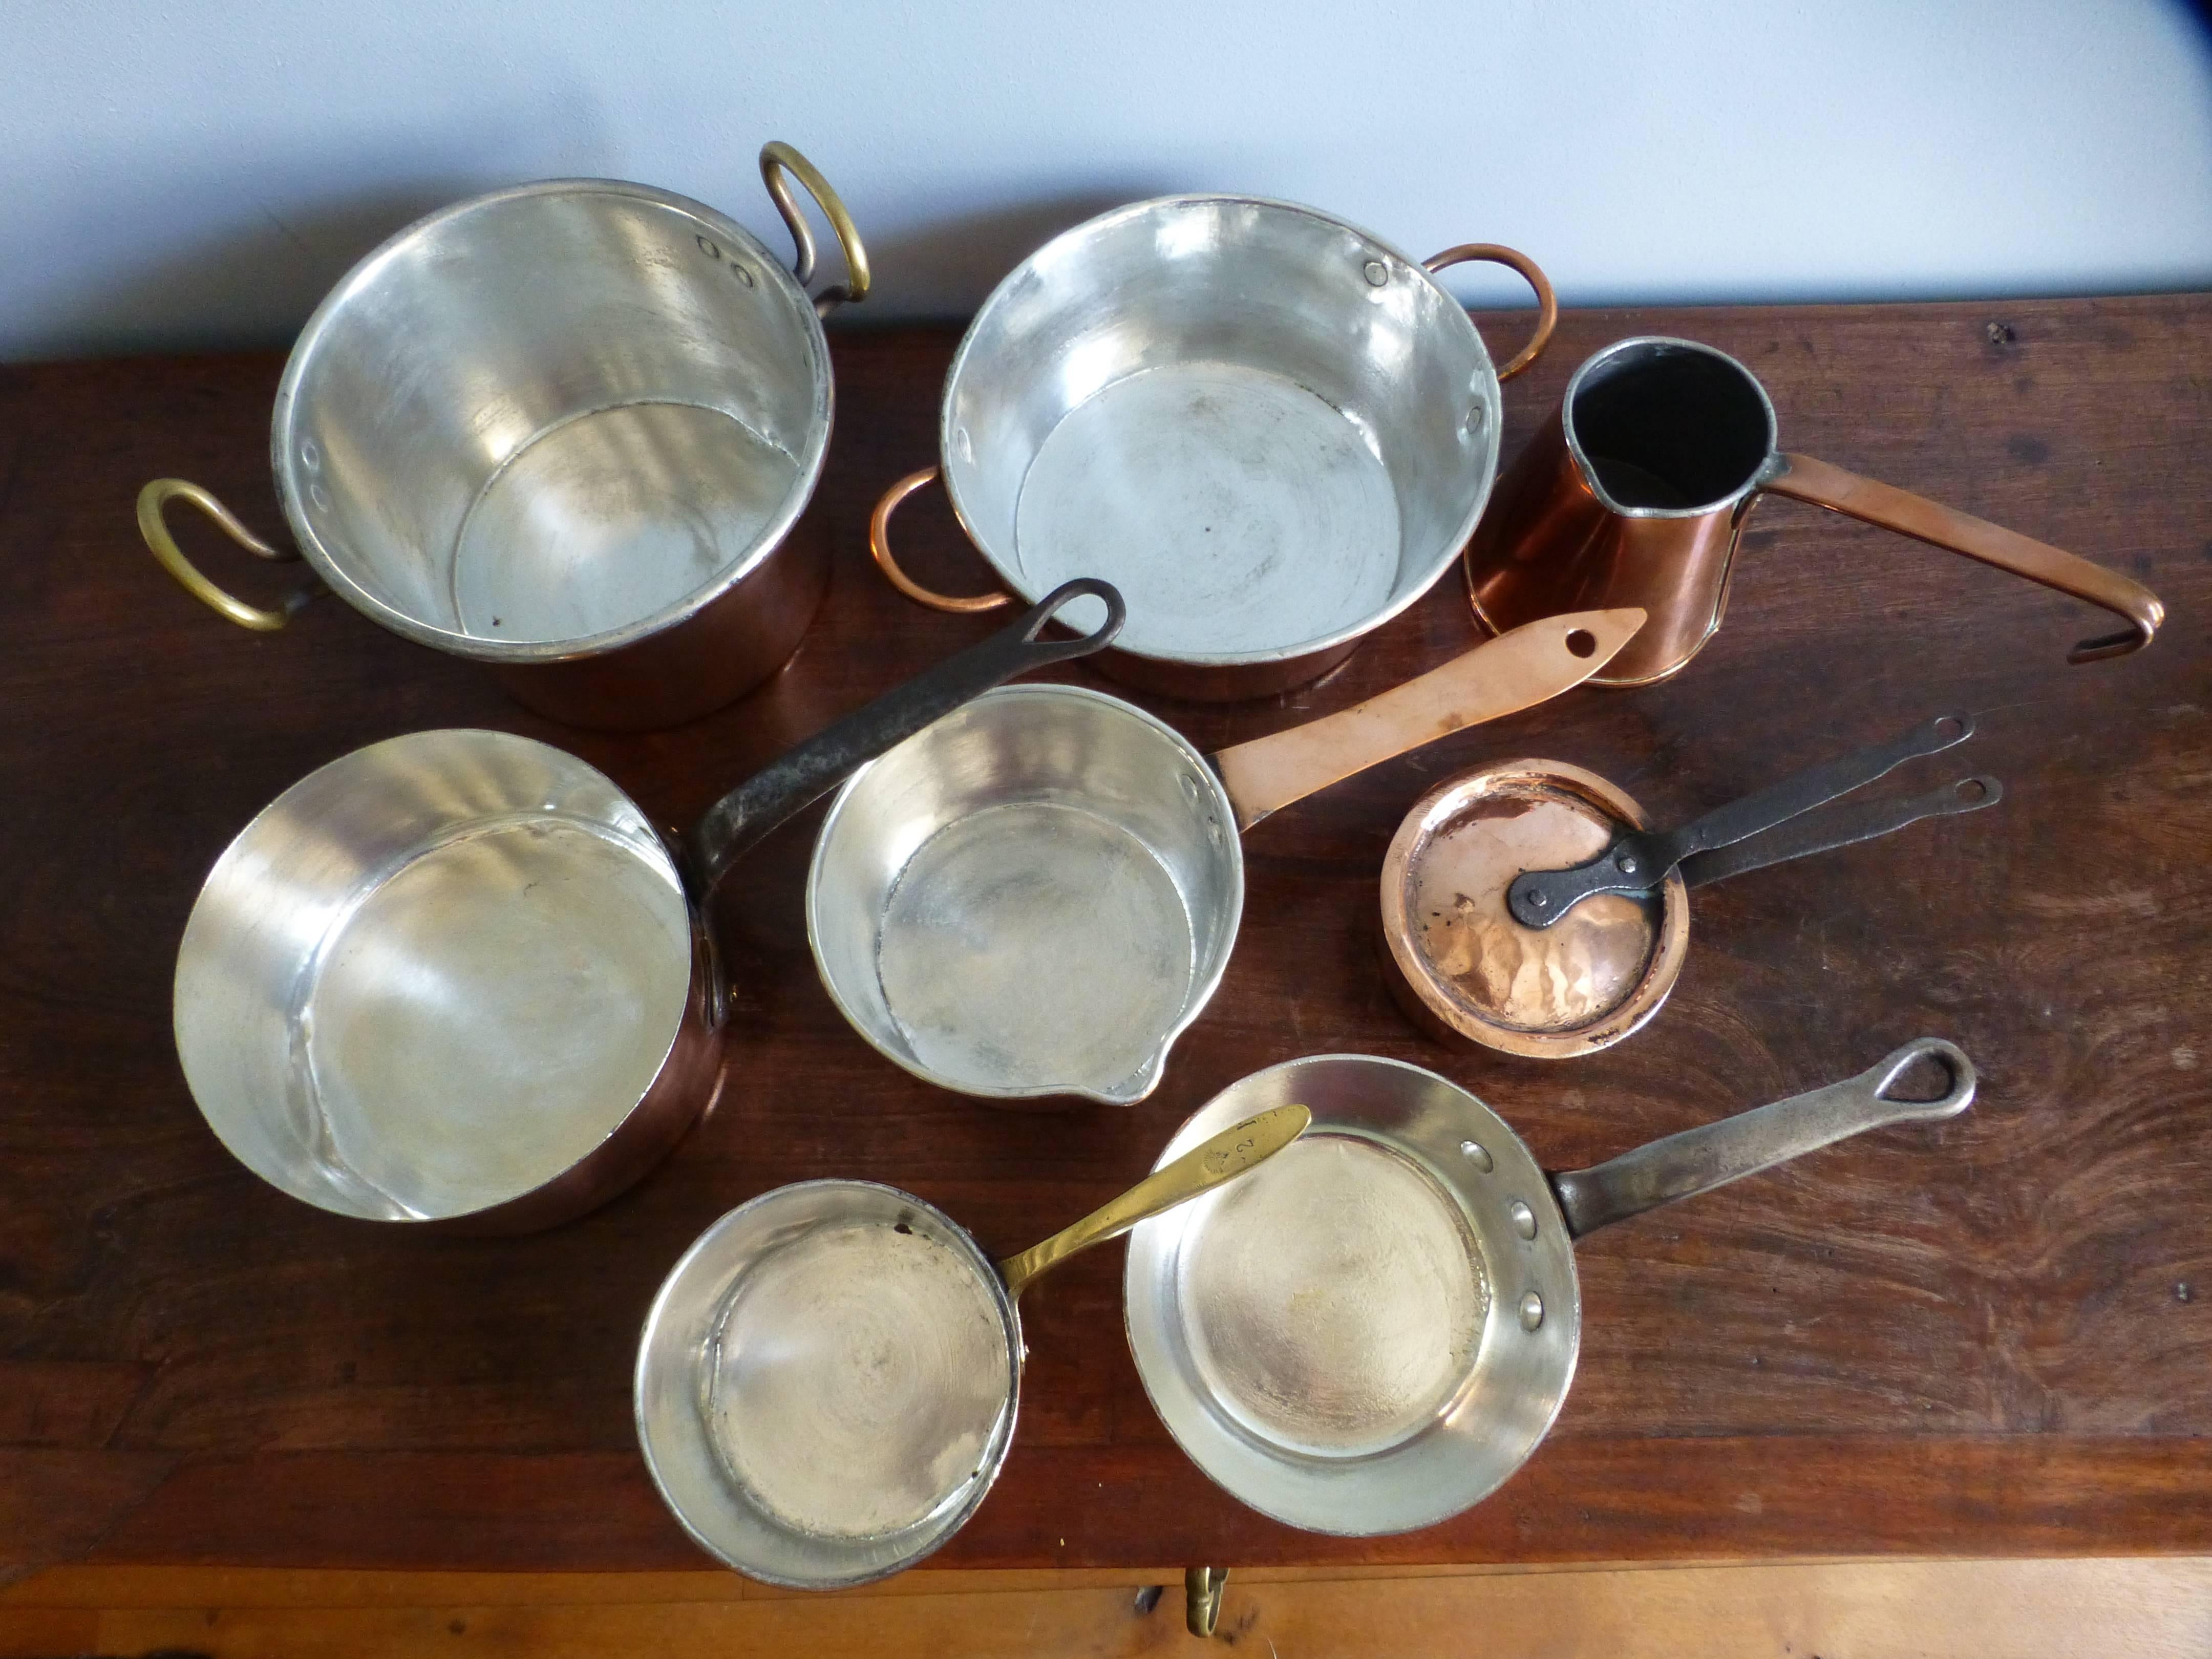 copper pots & pans re-tinning london